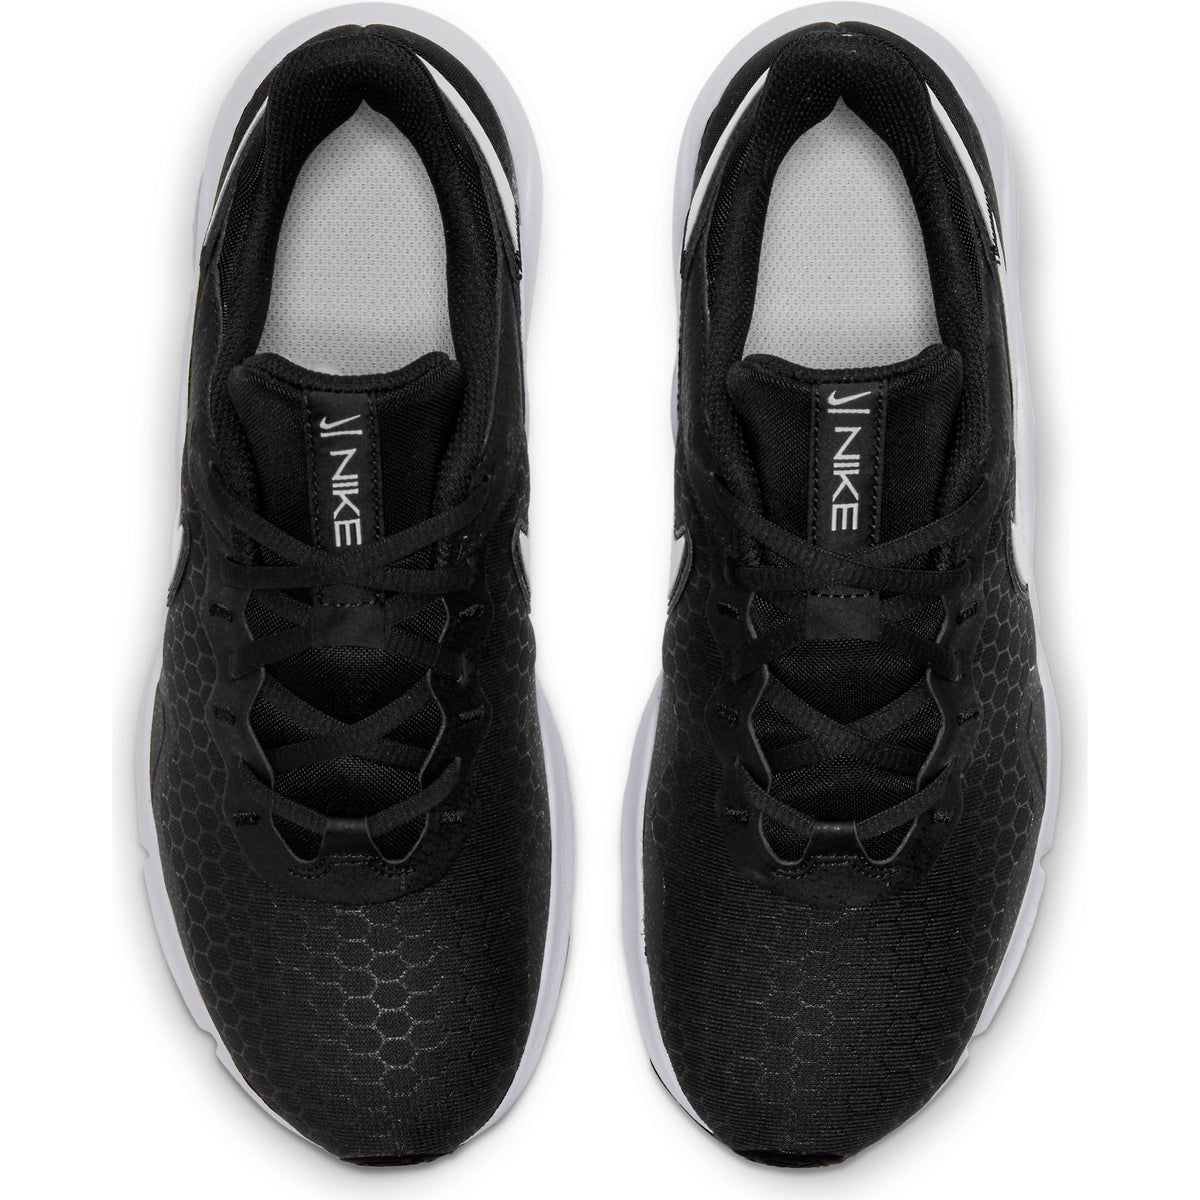 Zapatilla Nike WMNS Legend essential de Mujer color Negro